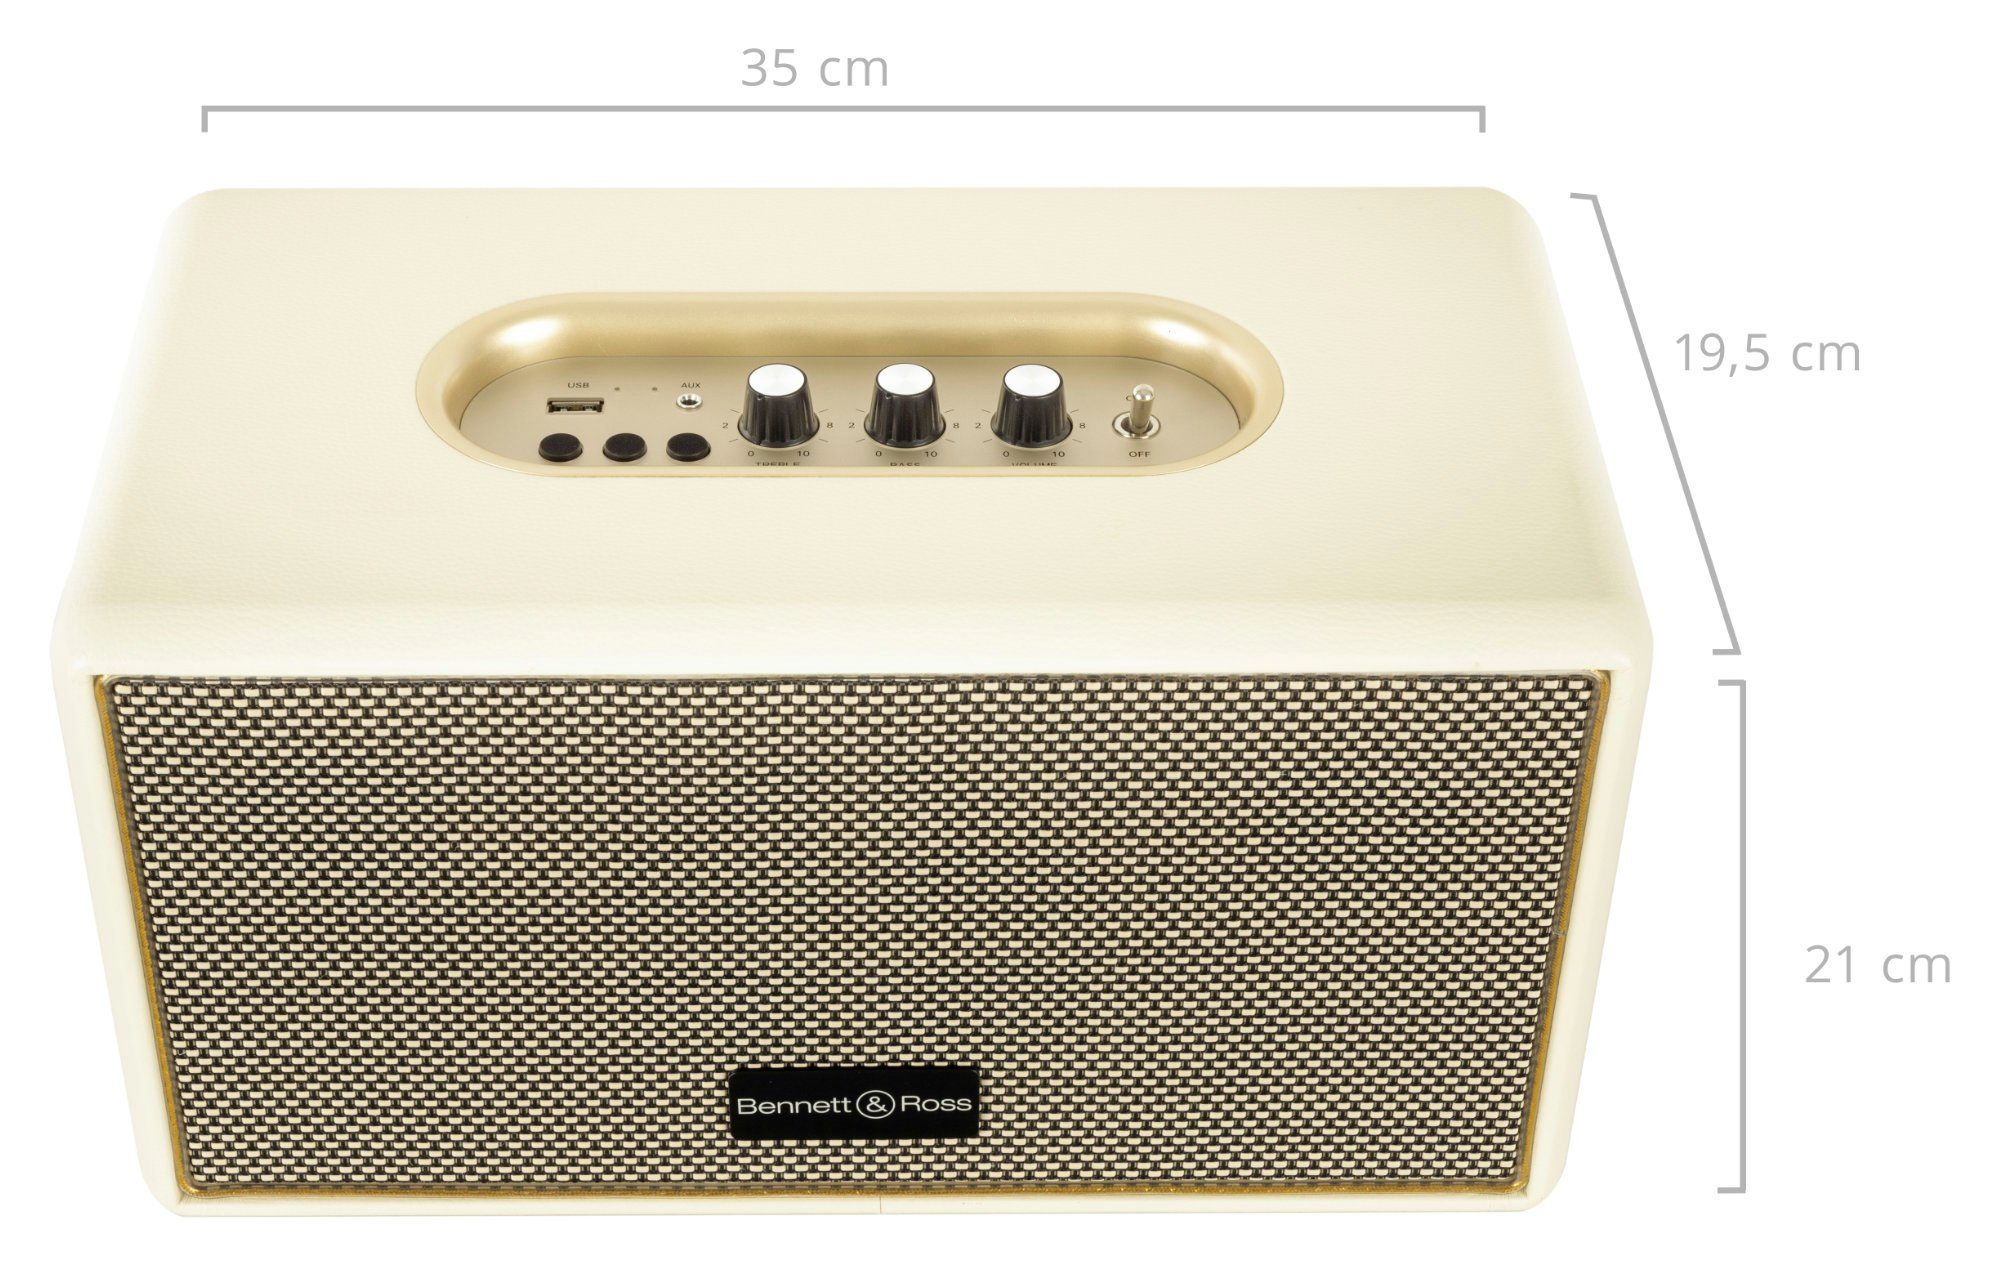 & (60 BB-860 Lederoptik) Creme-Weiß in Ross Lautsprecher Blackmore Stereoanlage Bennett W, Retro Bluetooth